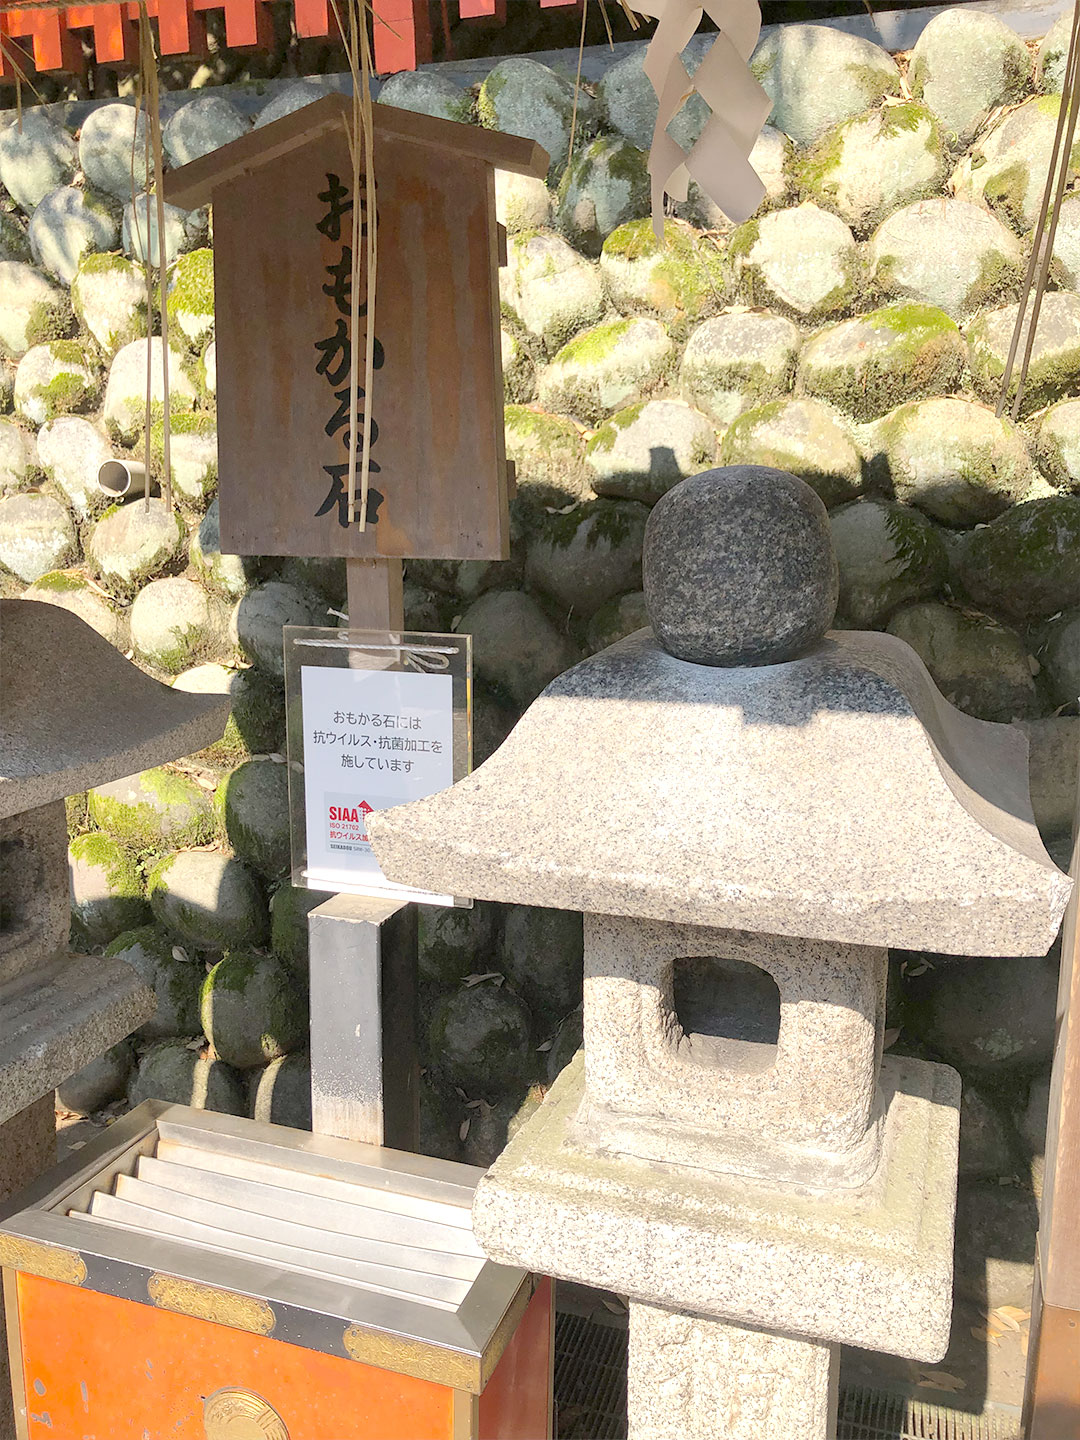 Omokaru stone